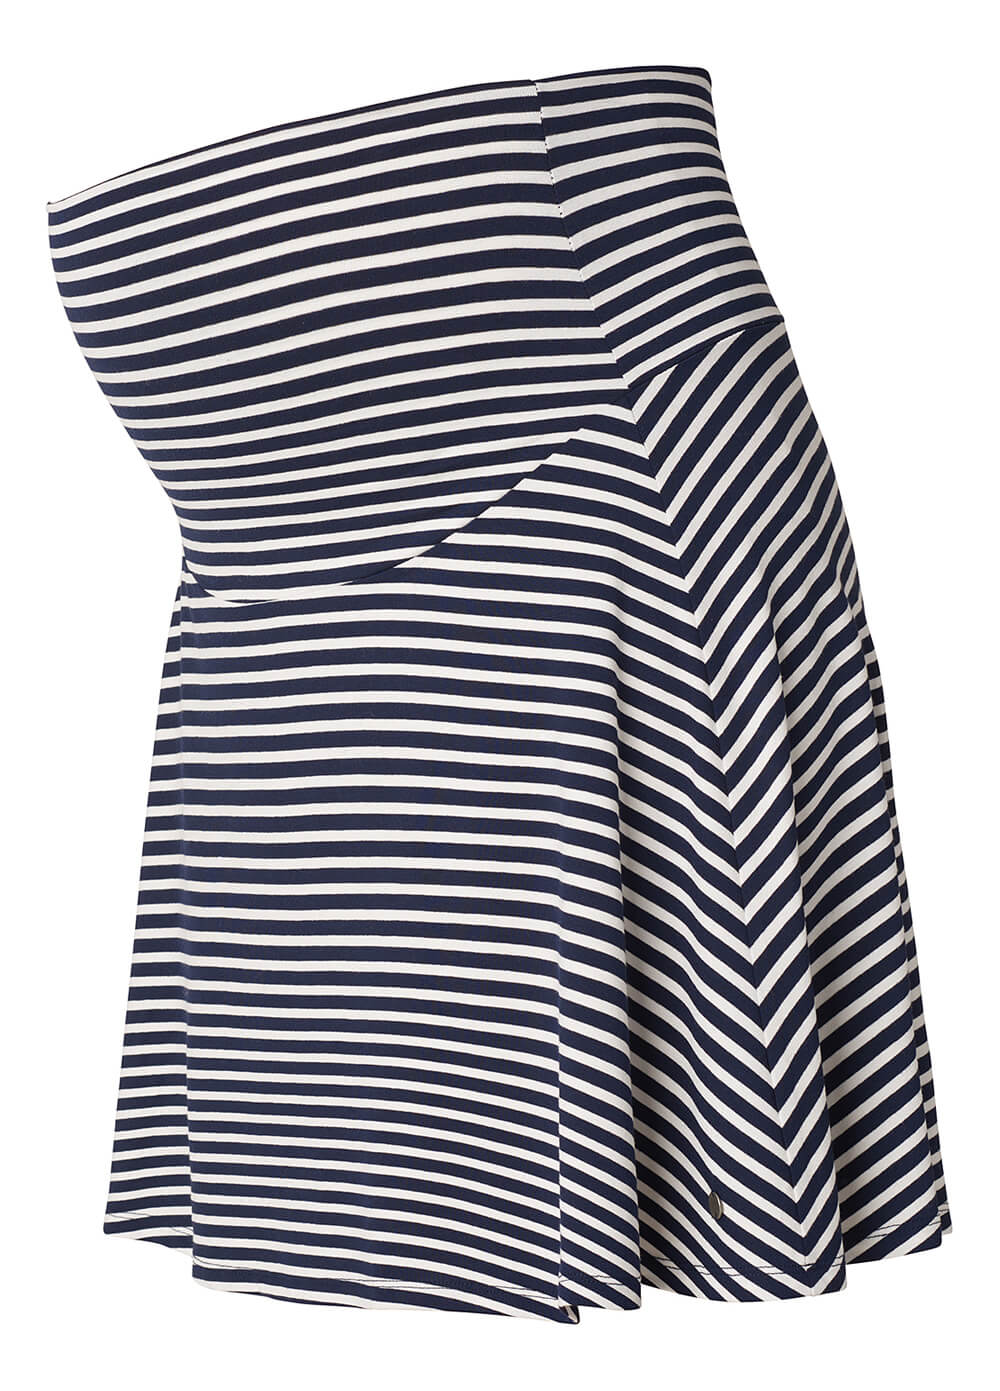 Swirling Navy Striped Jersey Maternity Skirt by Esprit